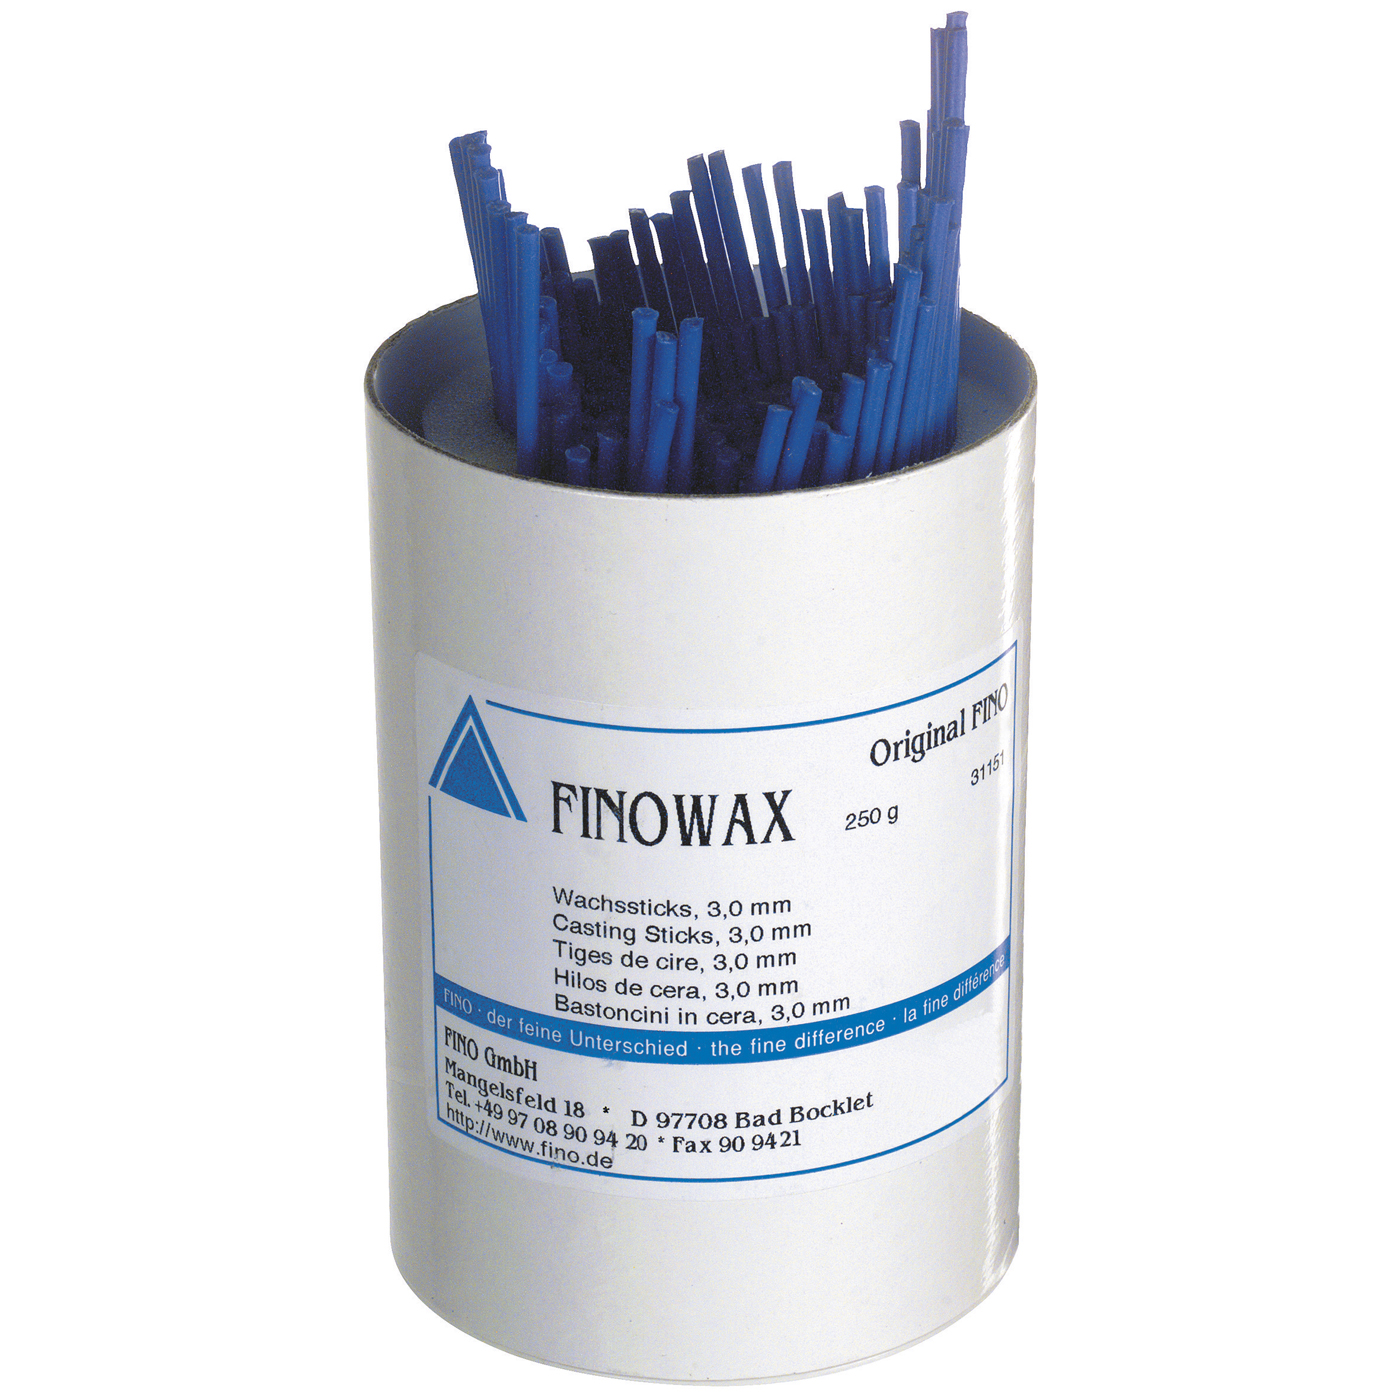 FINOWAX Wachssticks, ø 3,0 mm, blau - 250 g